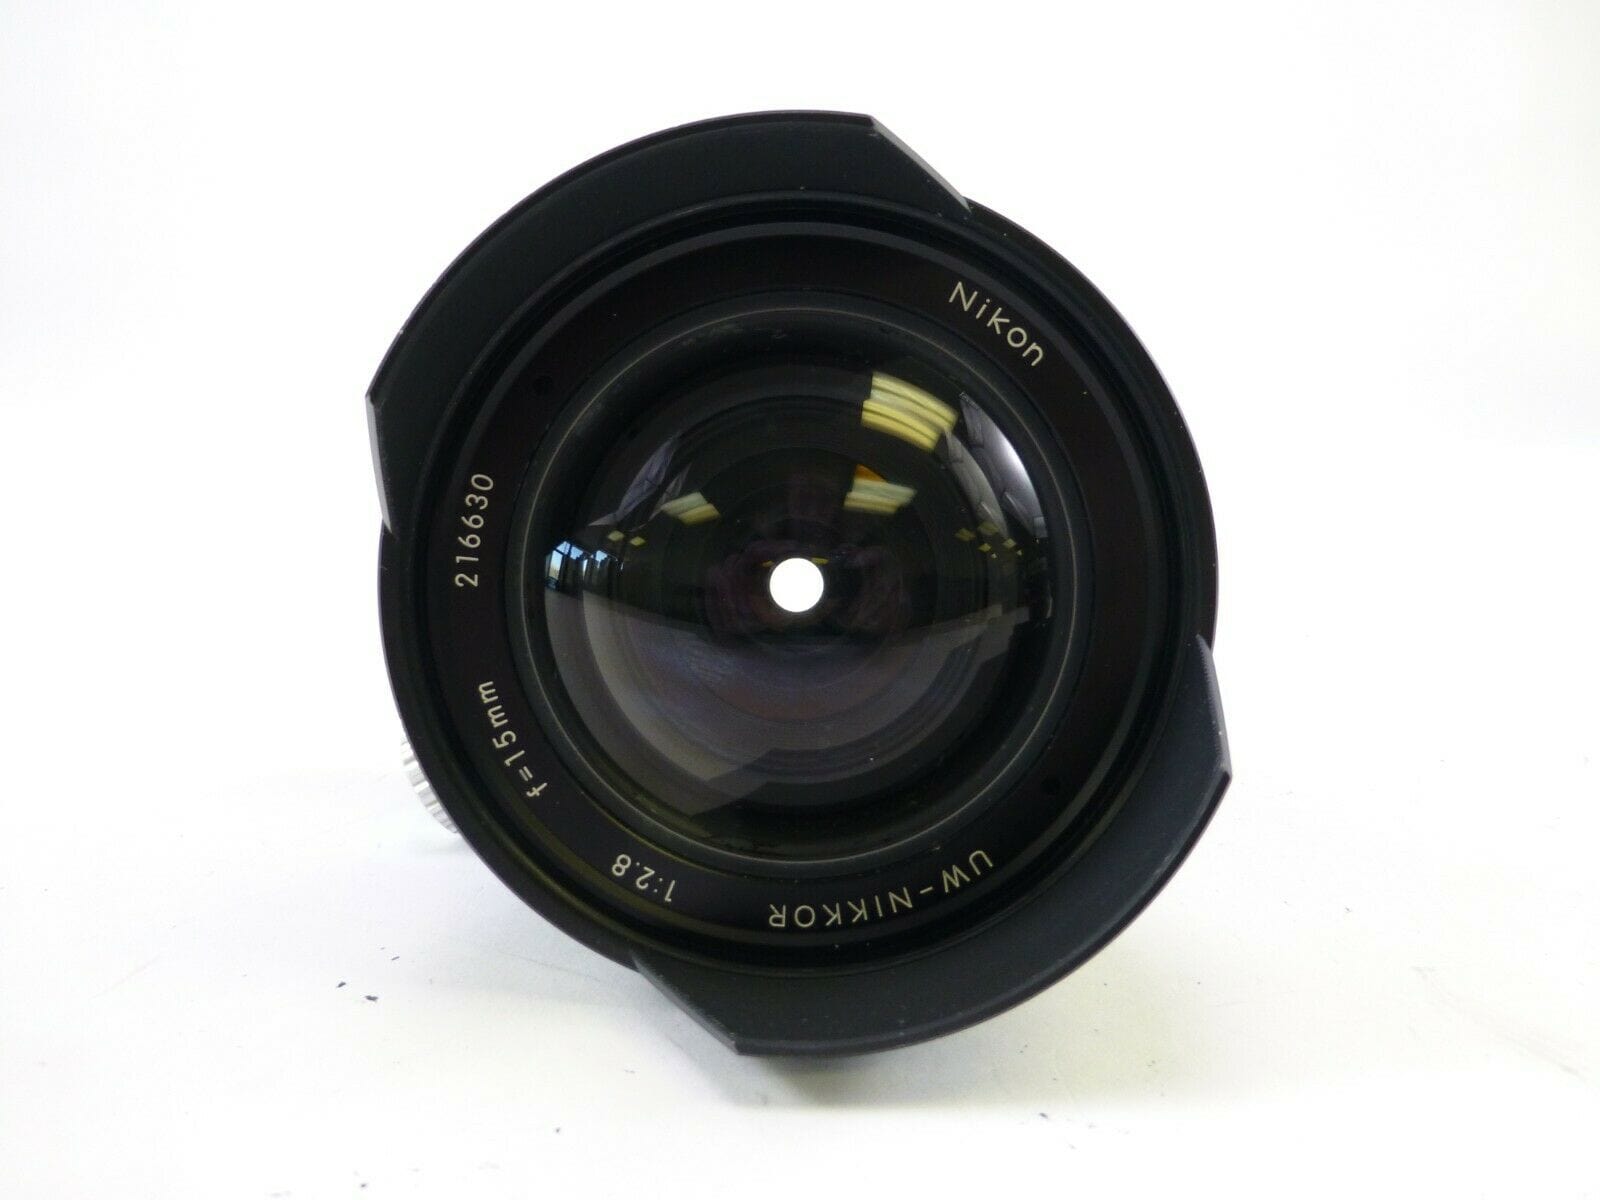 Nikon UW-Nikkor 15mm F/2.8 Lens with Nikonos 15 Viewfinder